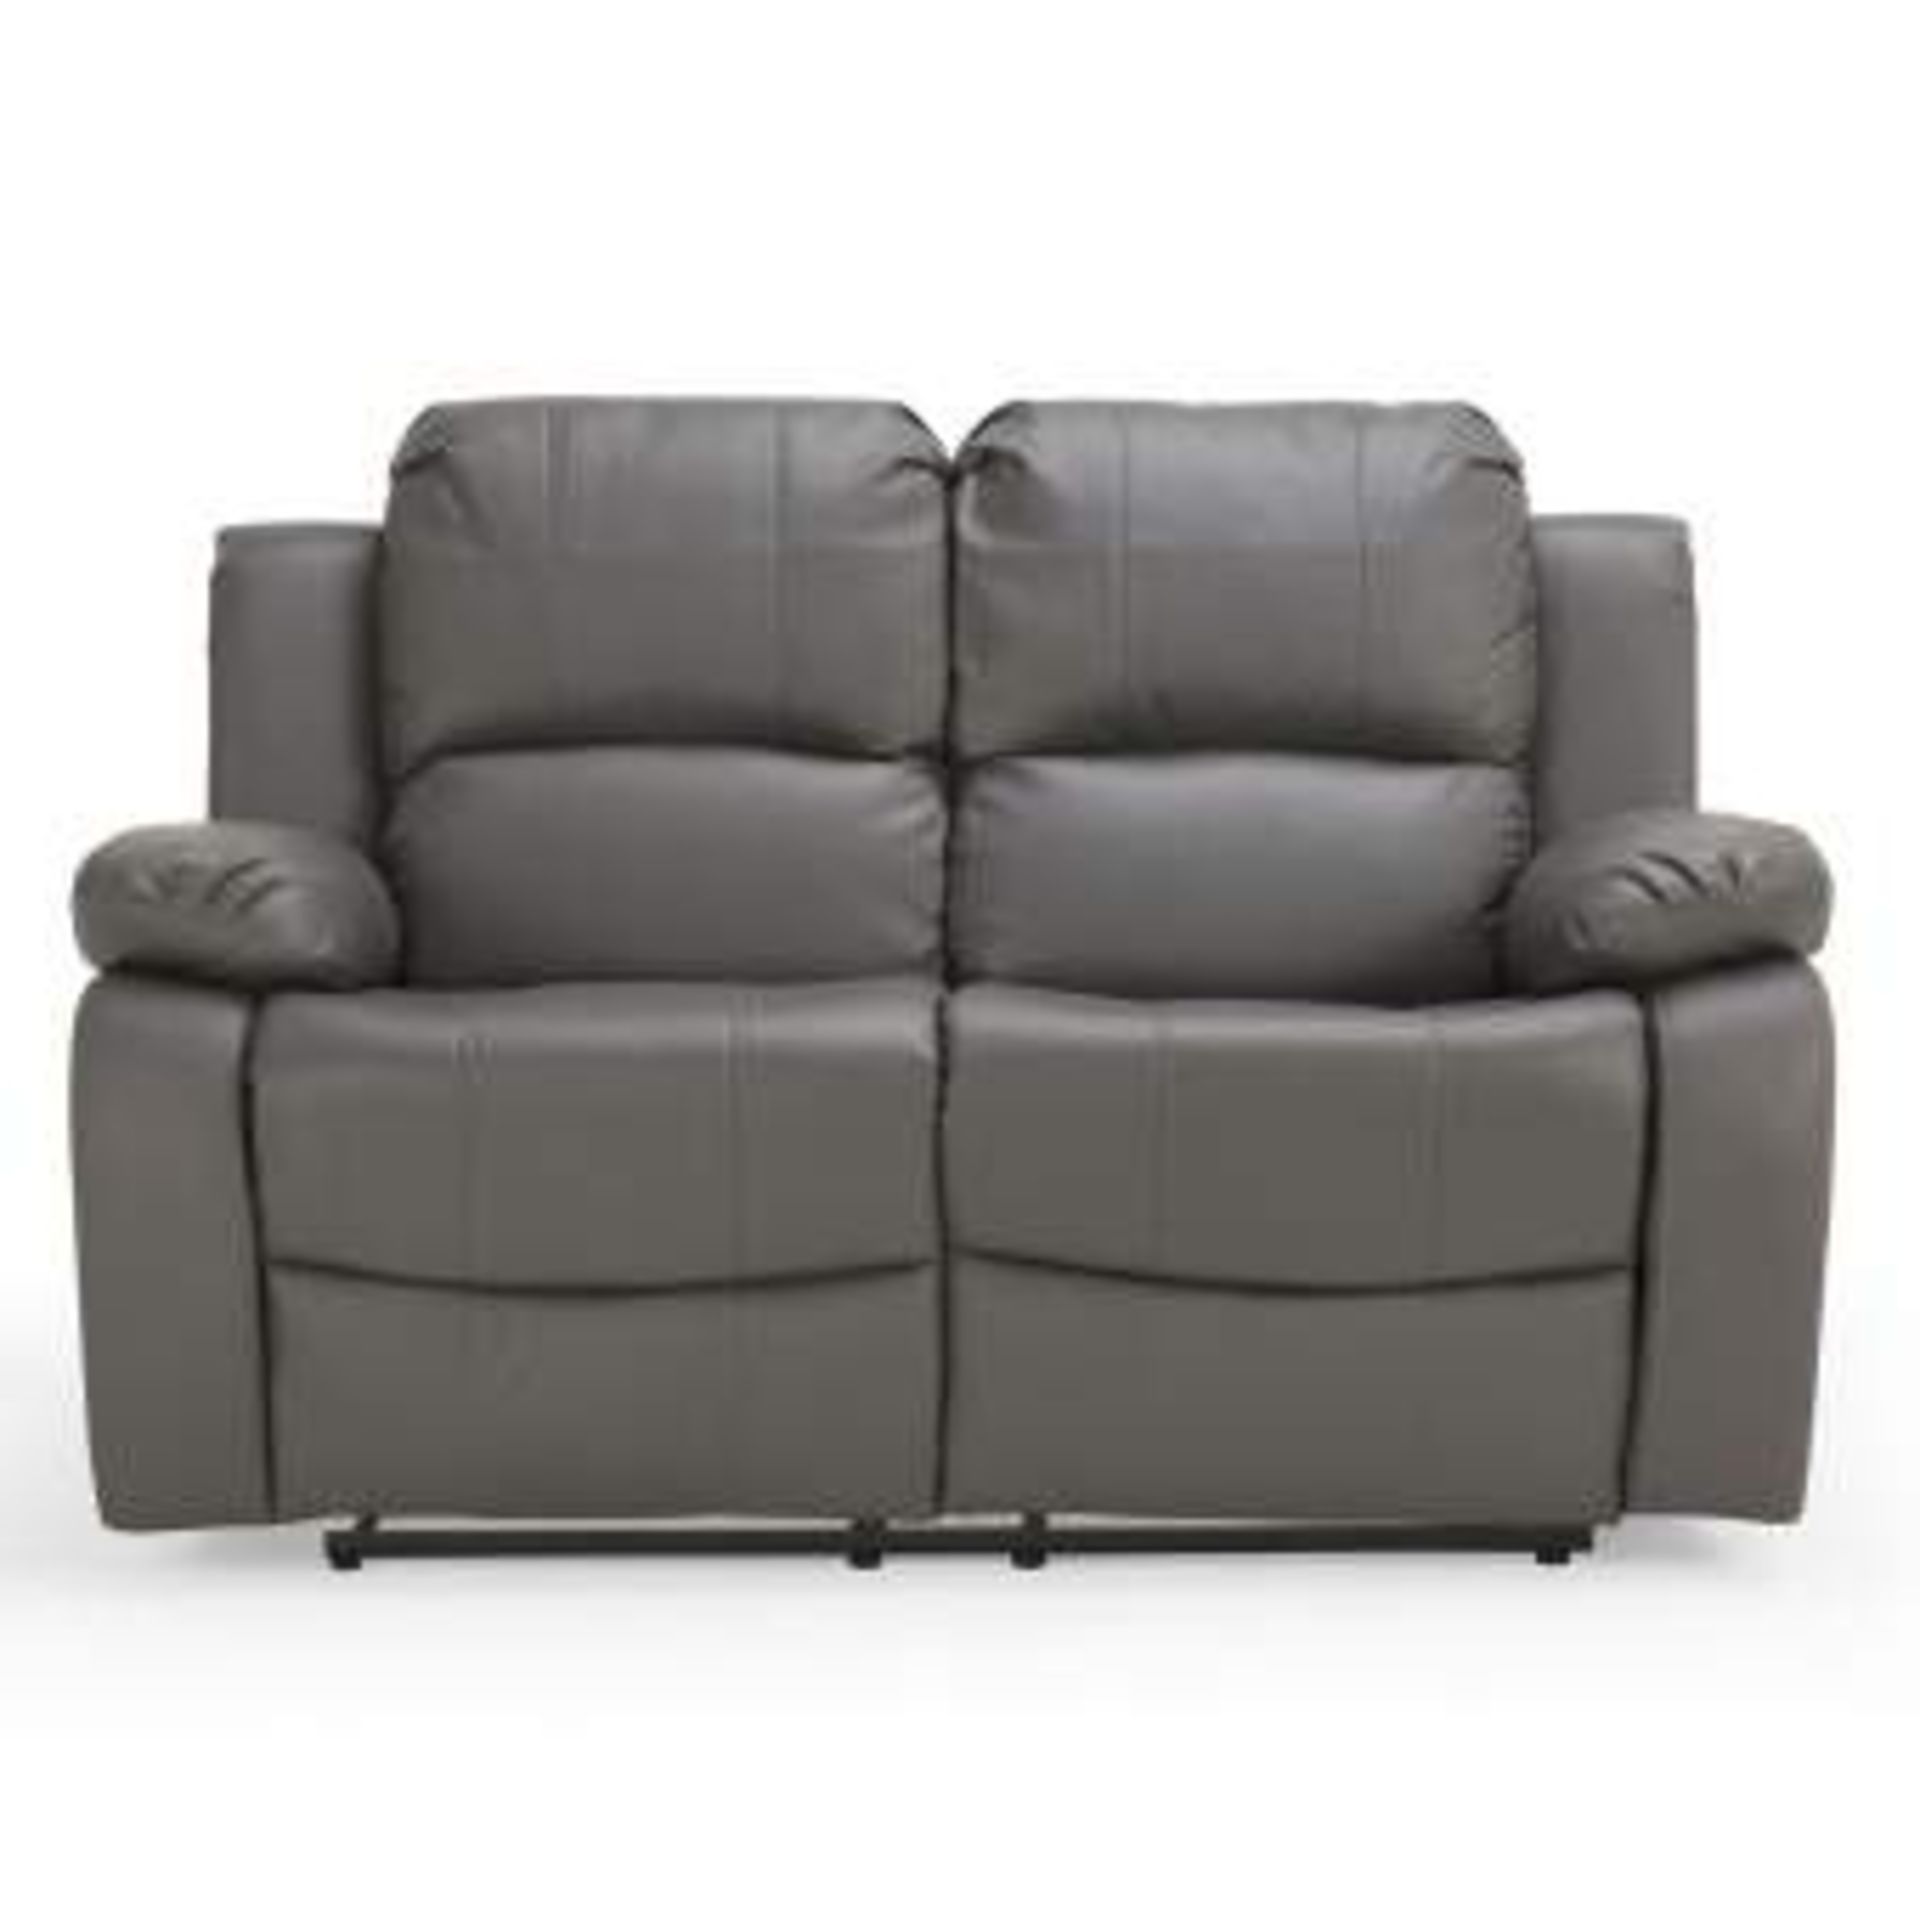 Supreme Valance graphite grey leather 2 seater reclining sofa